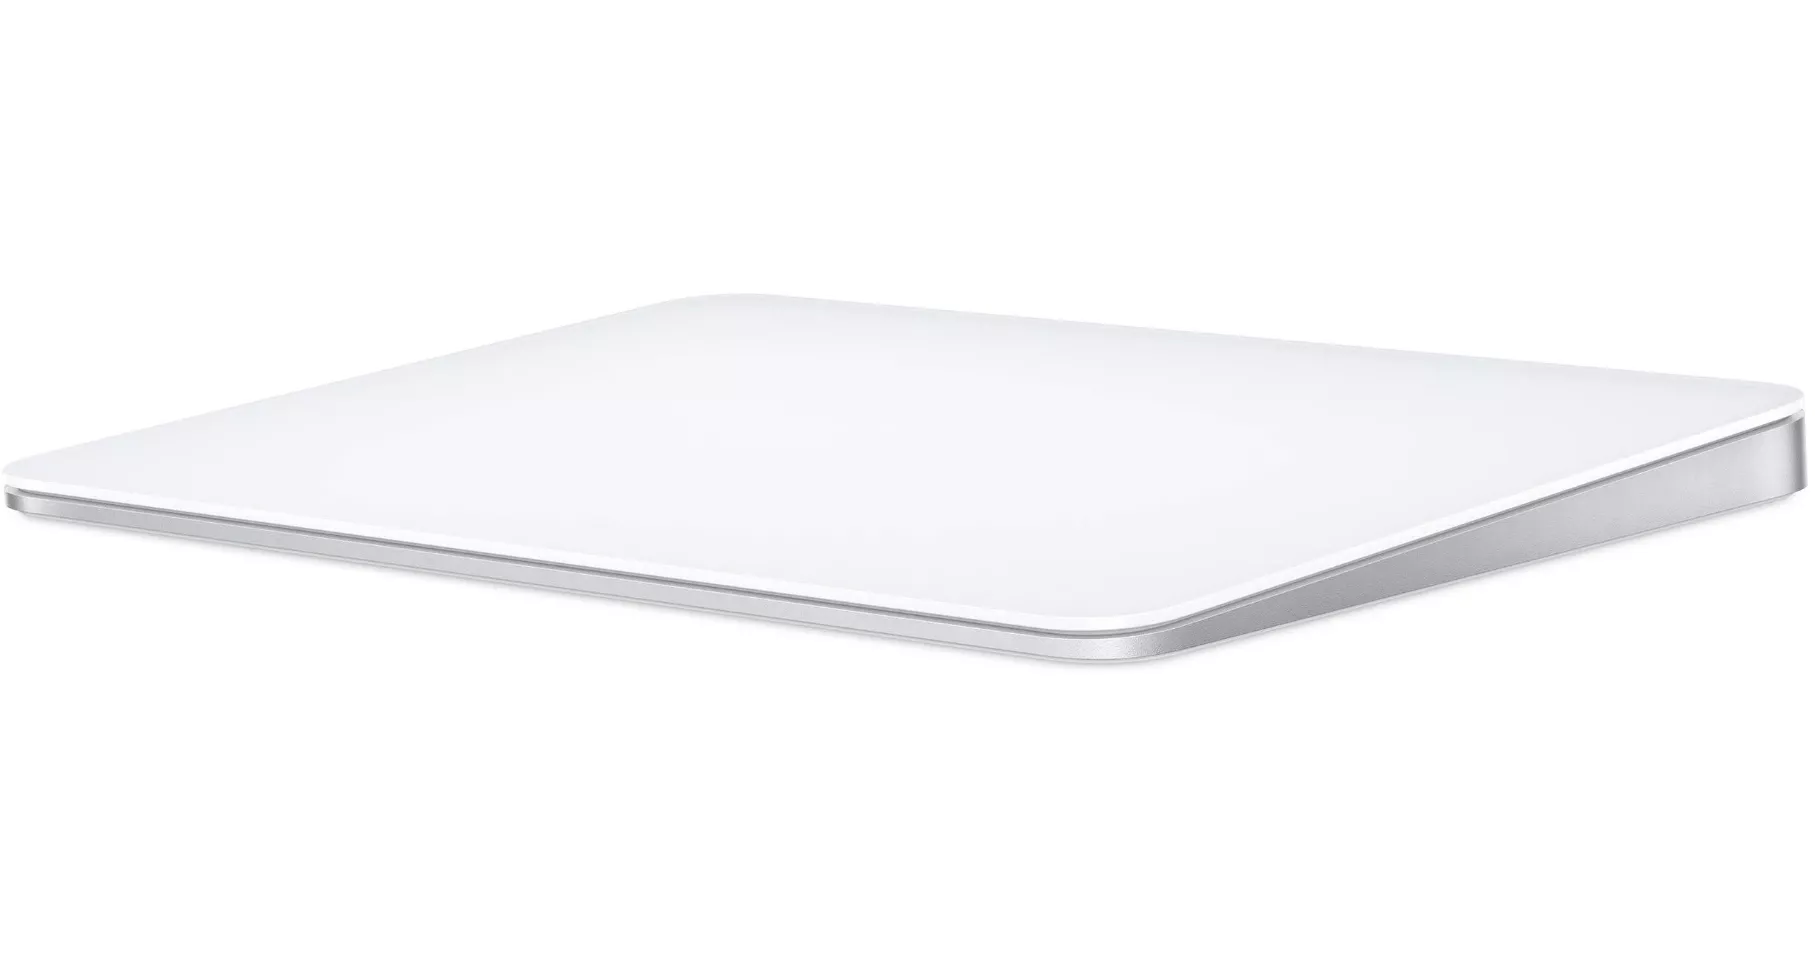 Трекпад Apple Magic Trackpad 3, белый